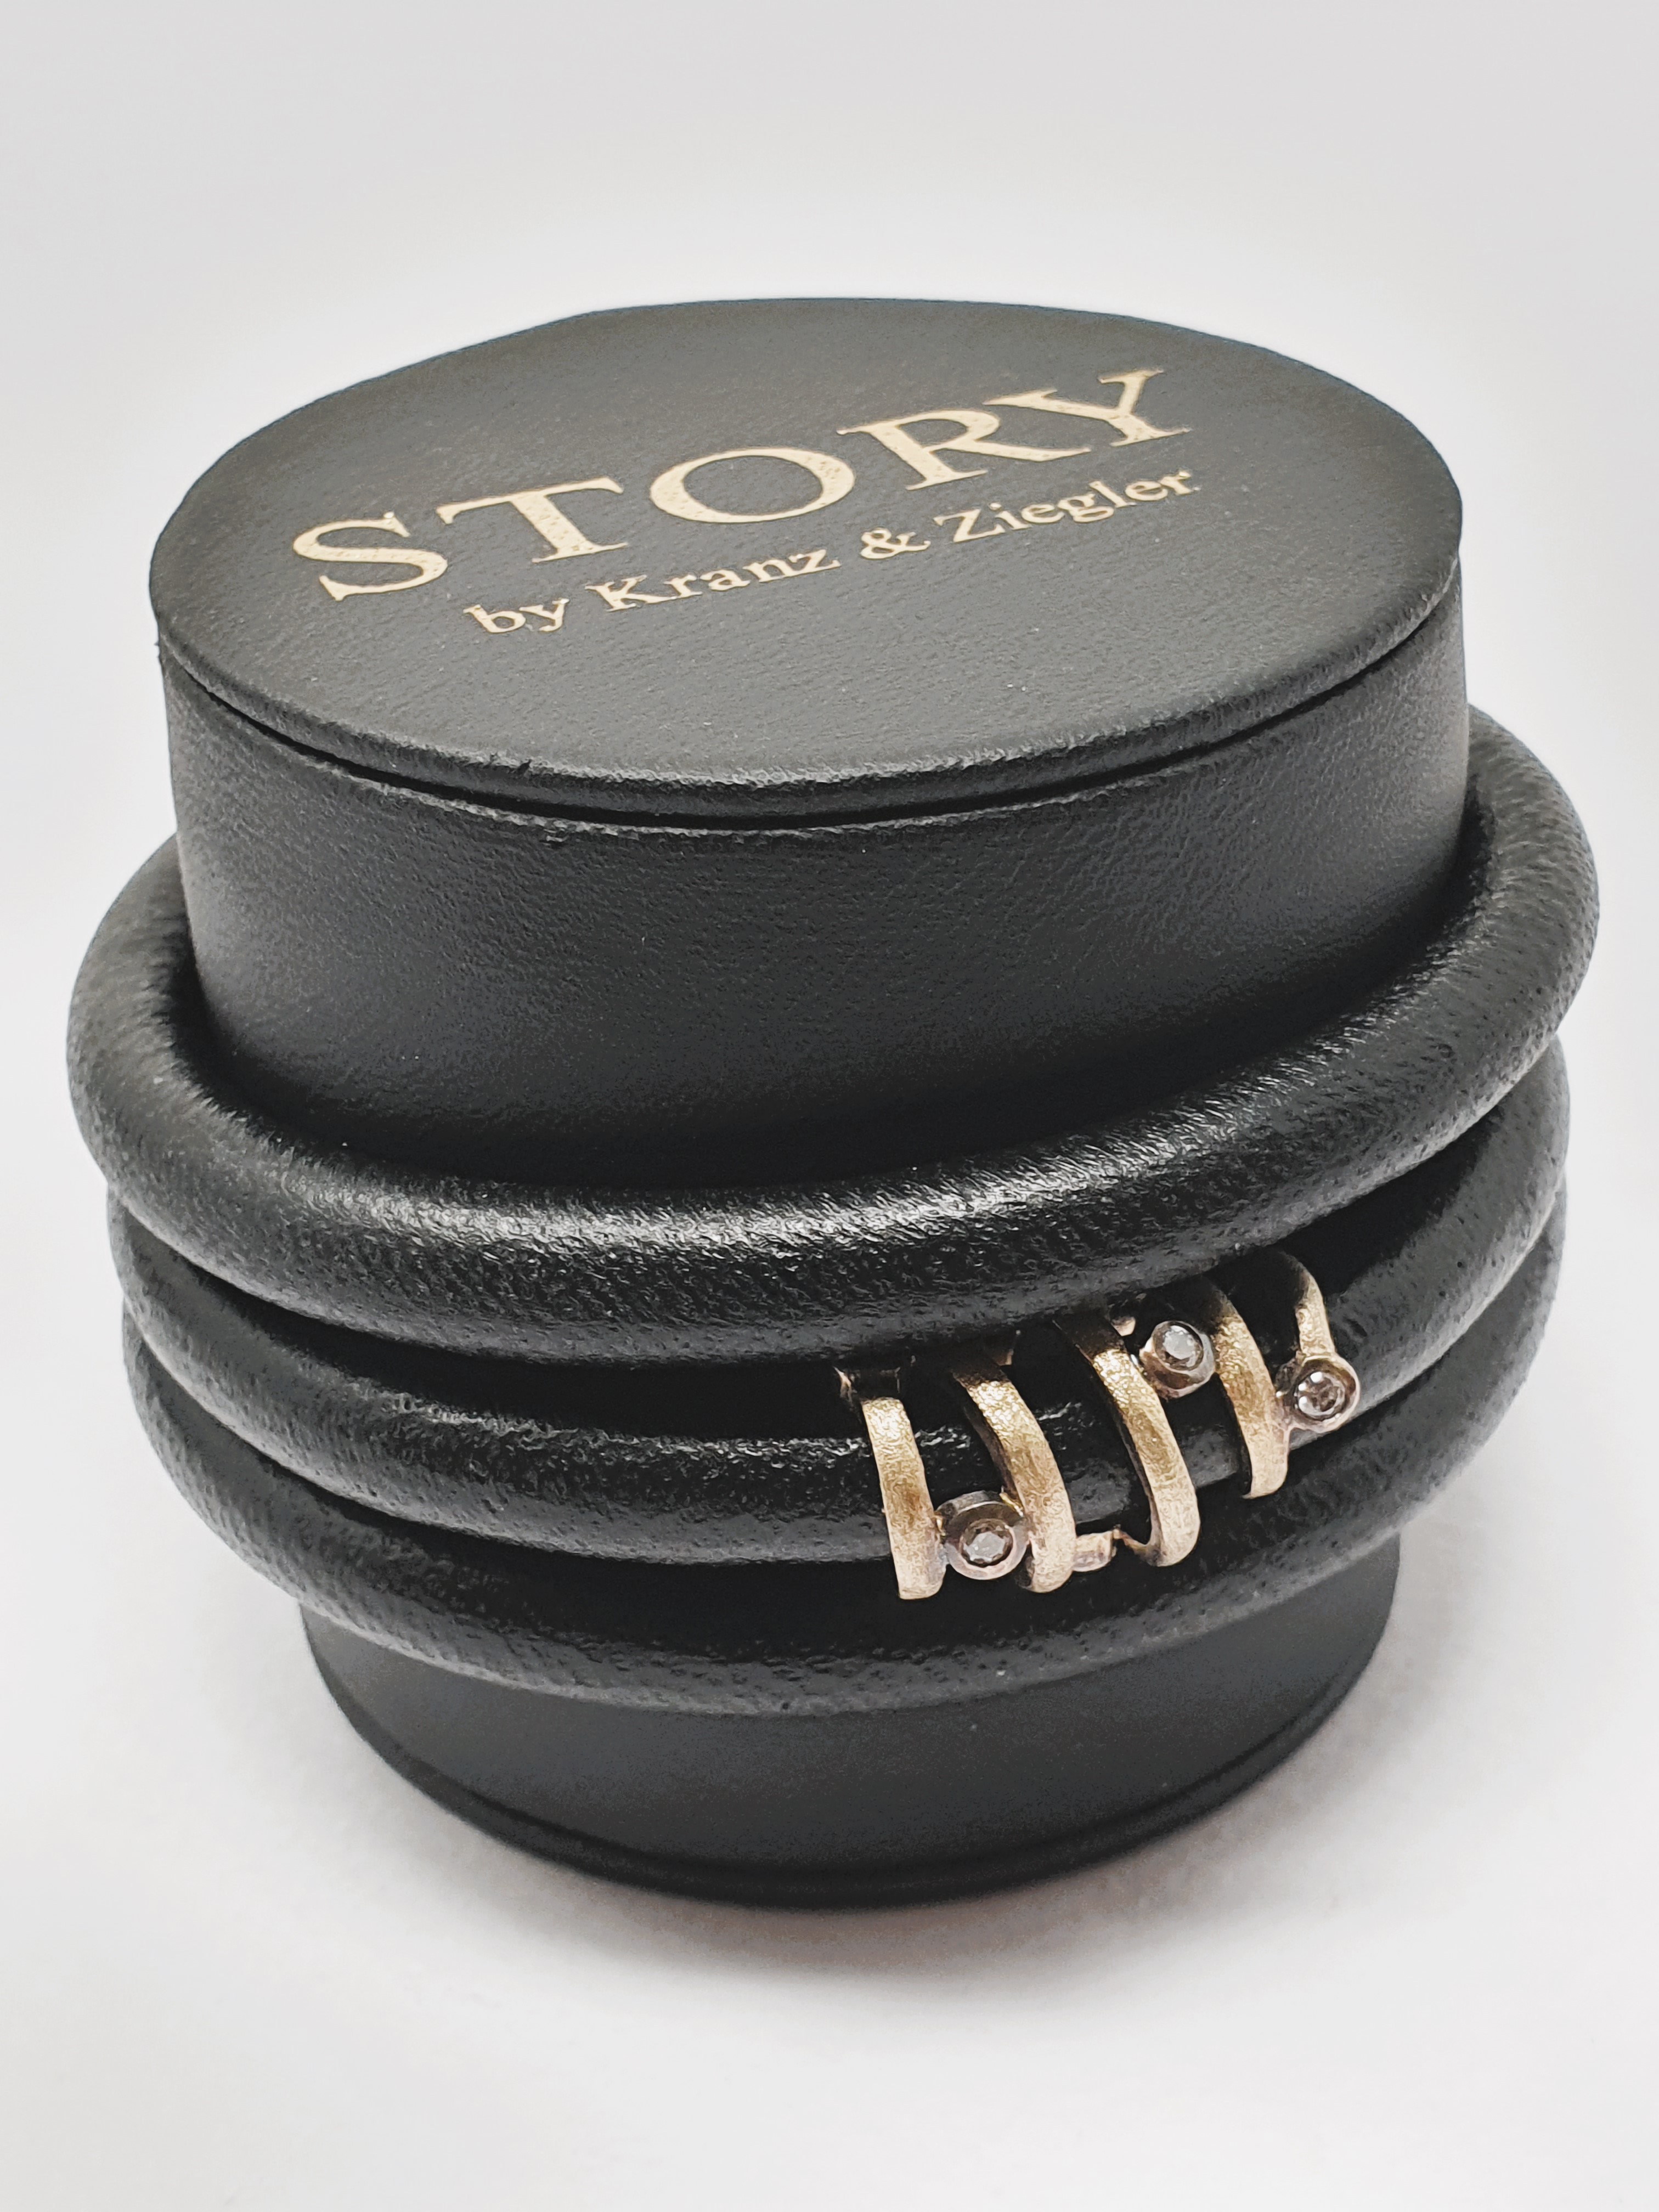 STORY' by Kranz & Ziegler lilac leather wrap bracelet with mother of pearl watch, unworn / boxed, - Bild 2 aus 3